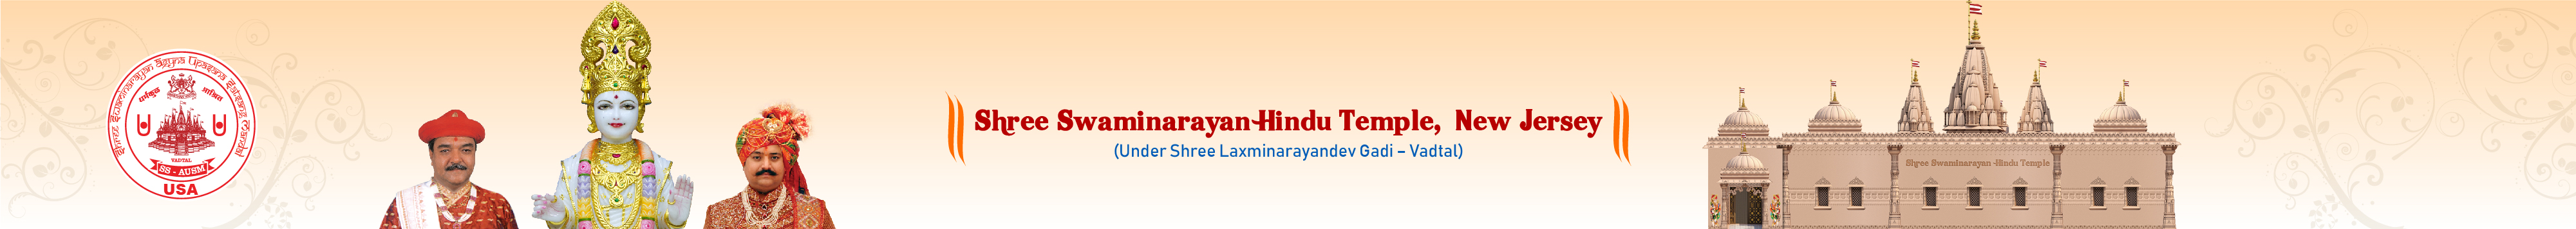 Shree Swaminarayan Hindu Temple - New Jersey, USA